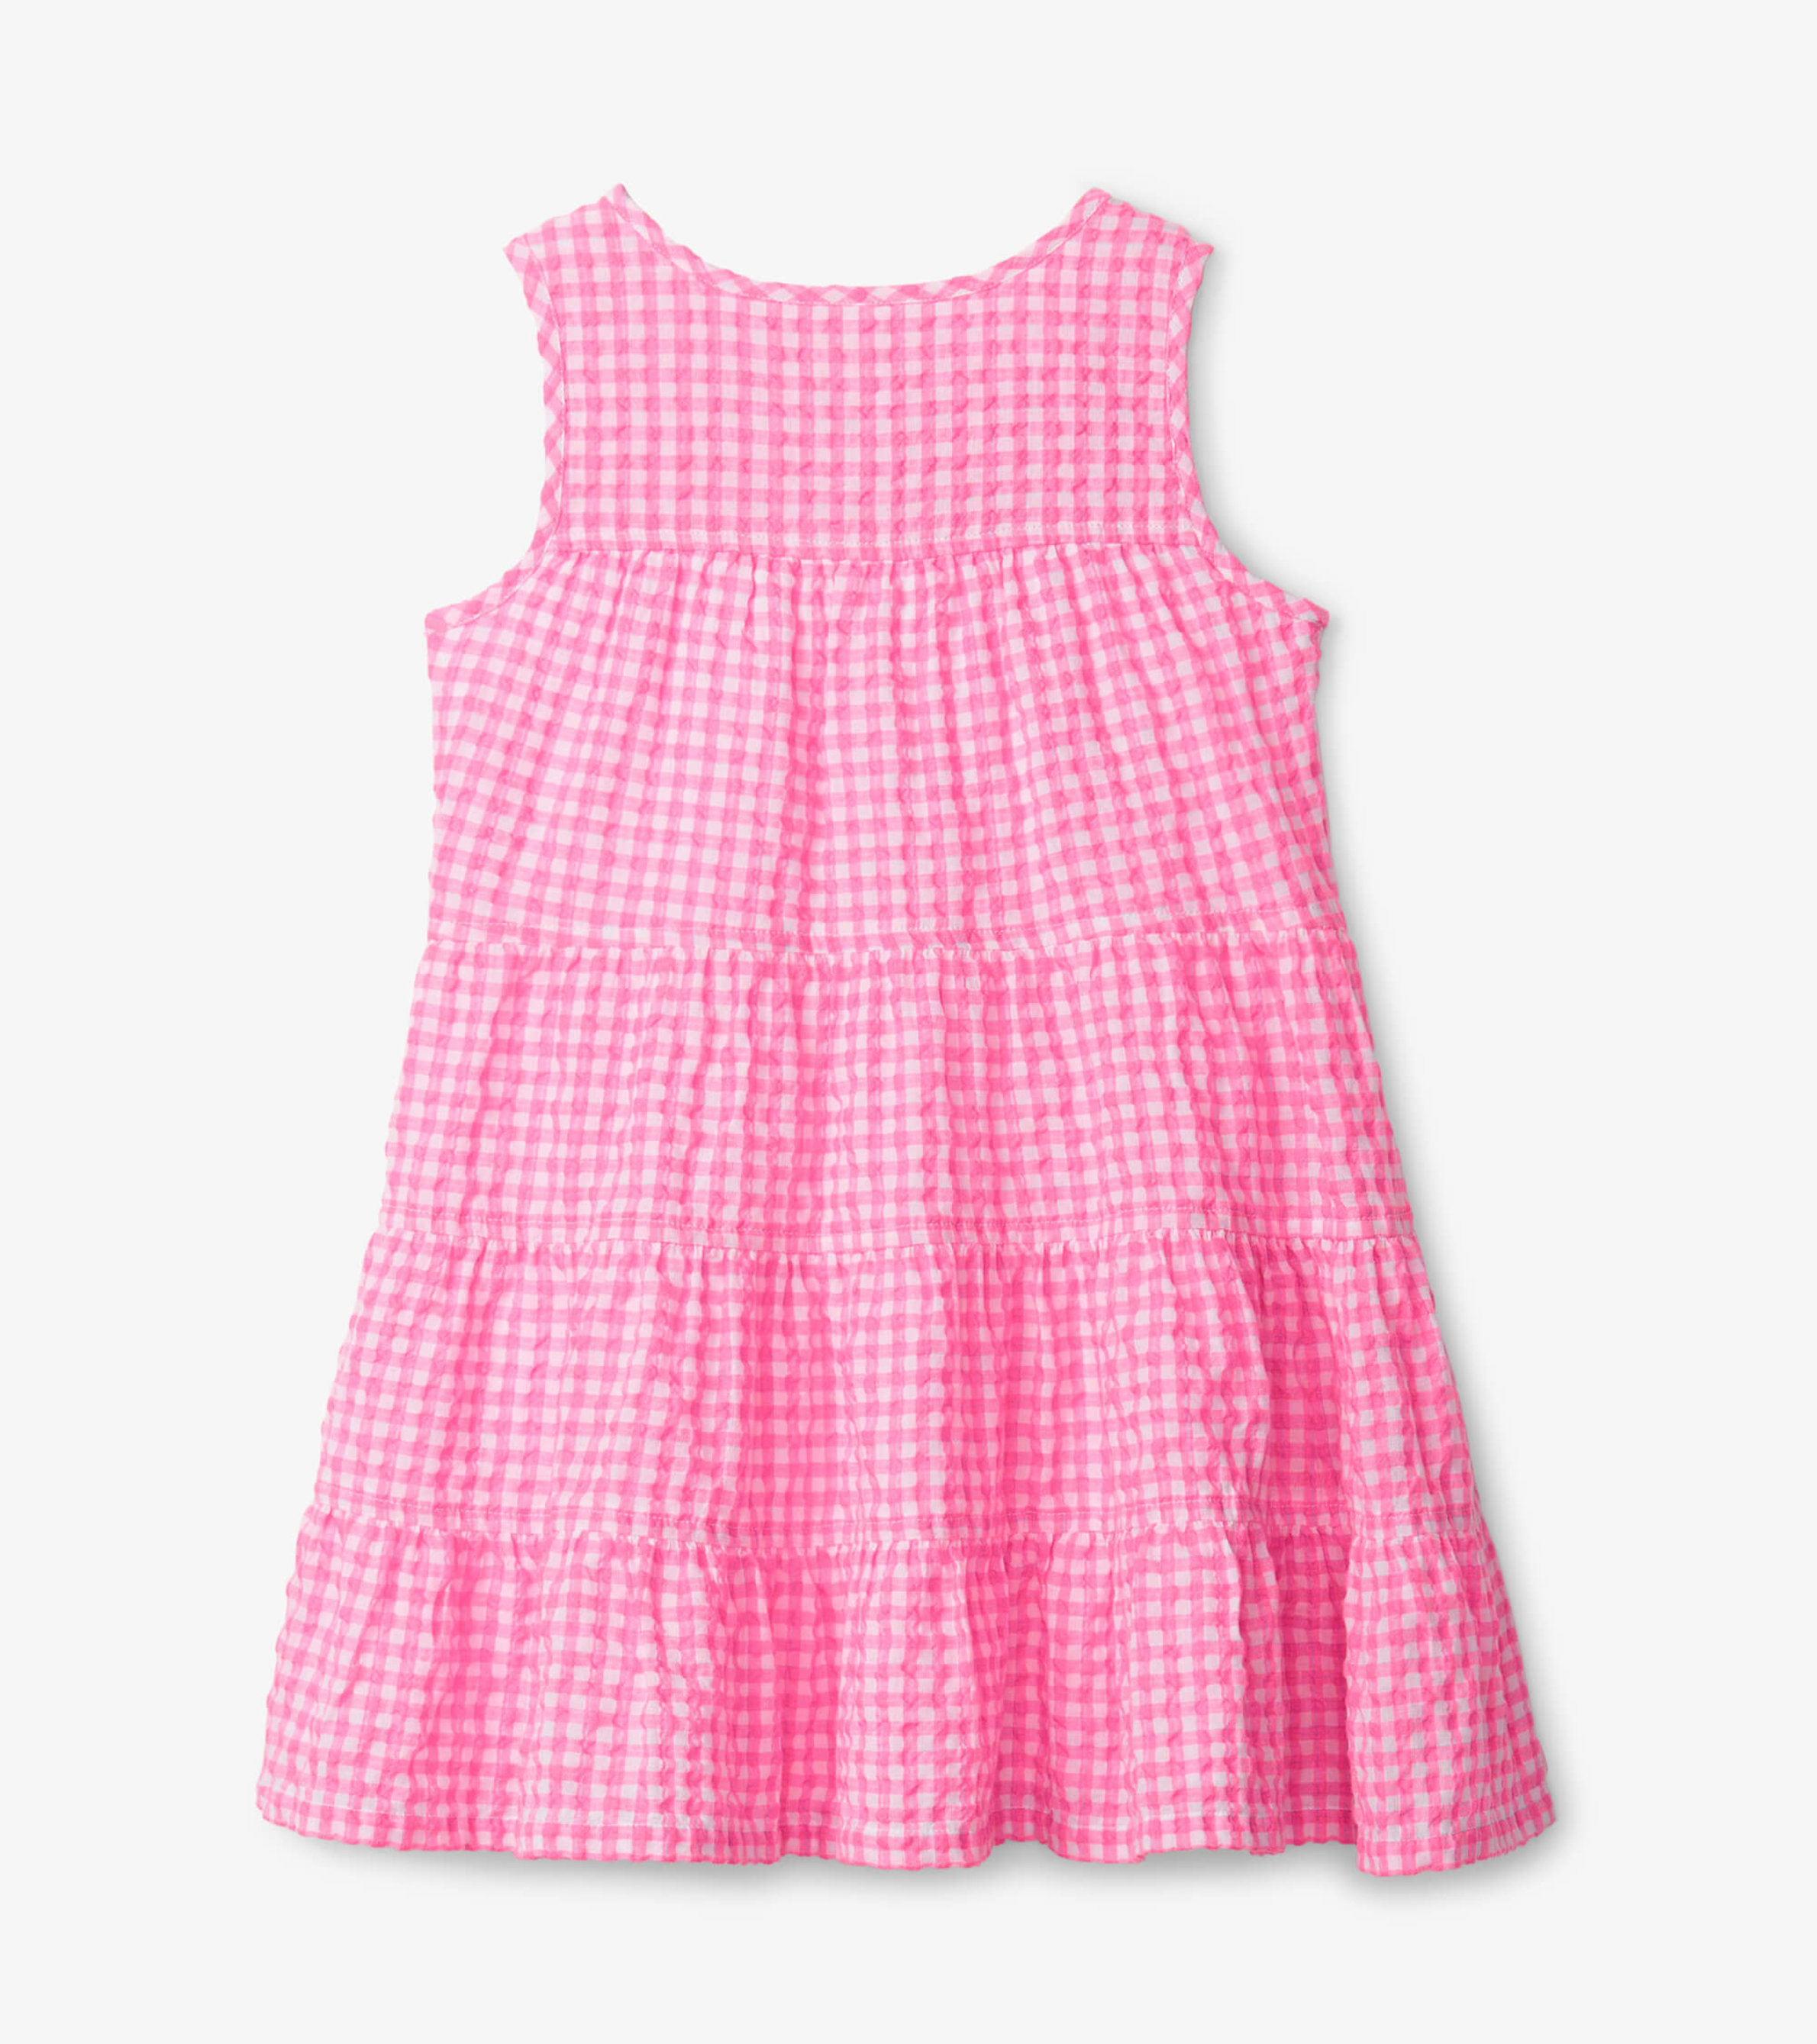 Pink Gingham Dress, Vintage Cotton Dress, Puff Sleeve Smock Dress, Shirred  Babydoll Dress, Sun Dress, Holiday Party Dresses for Women 